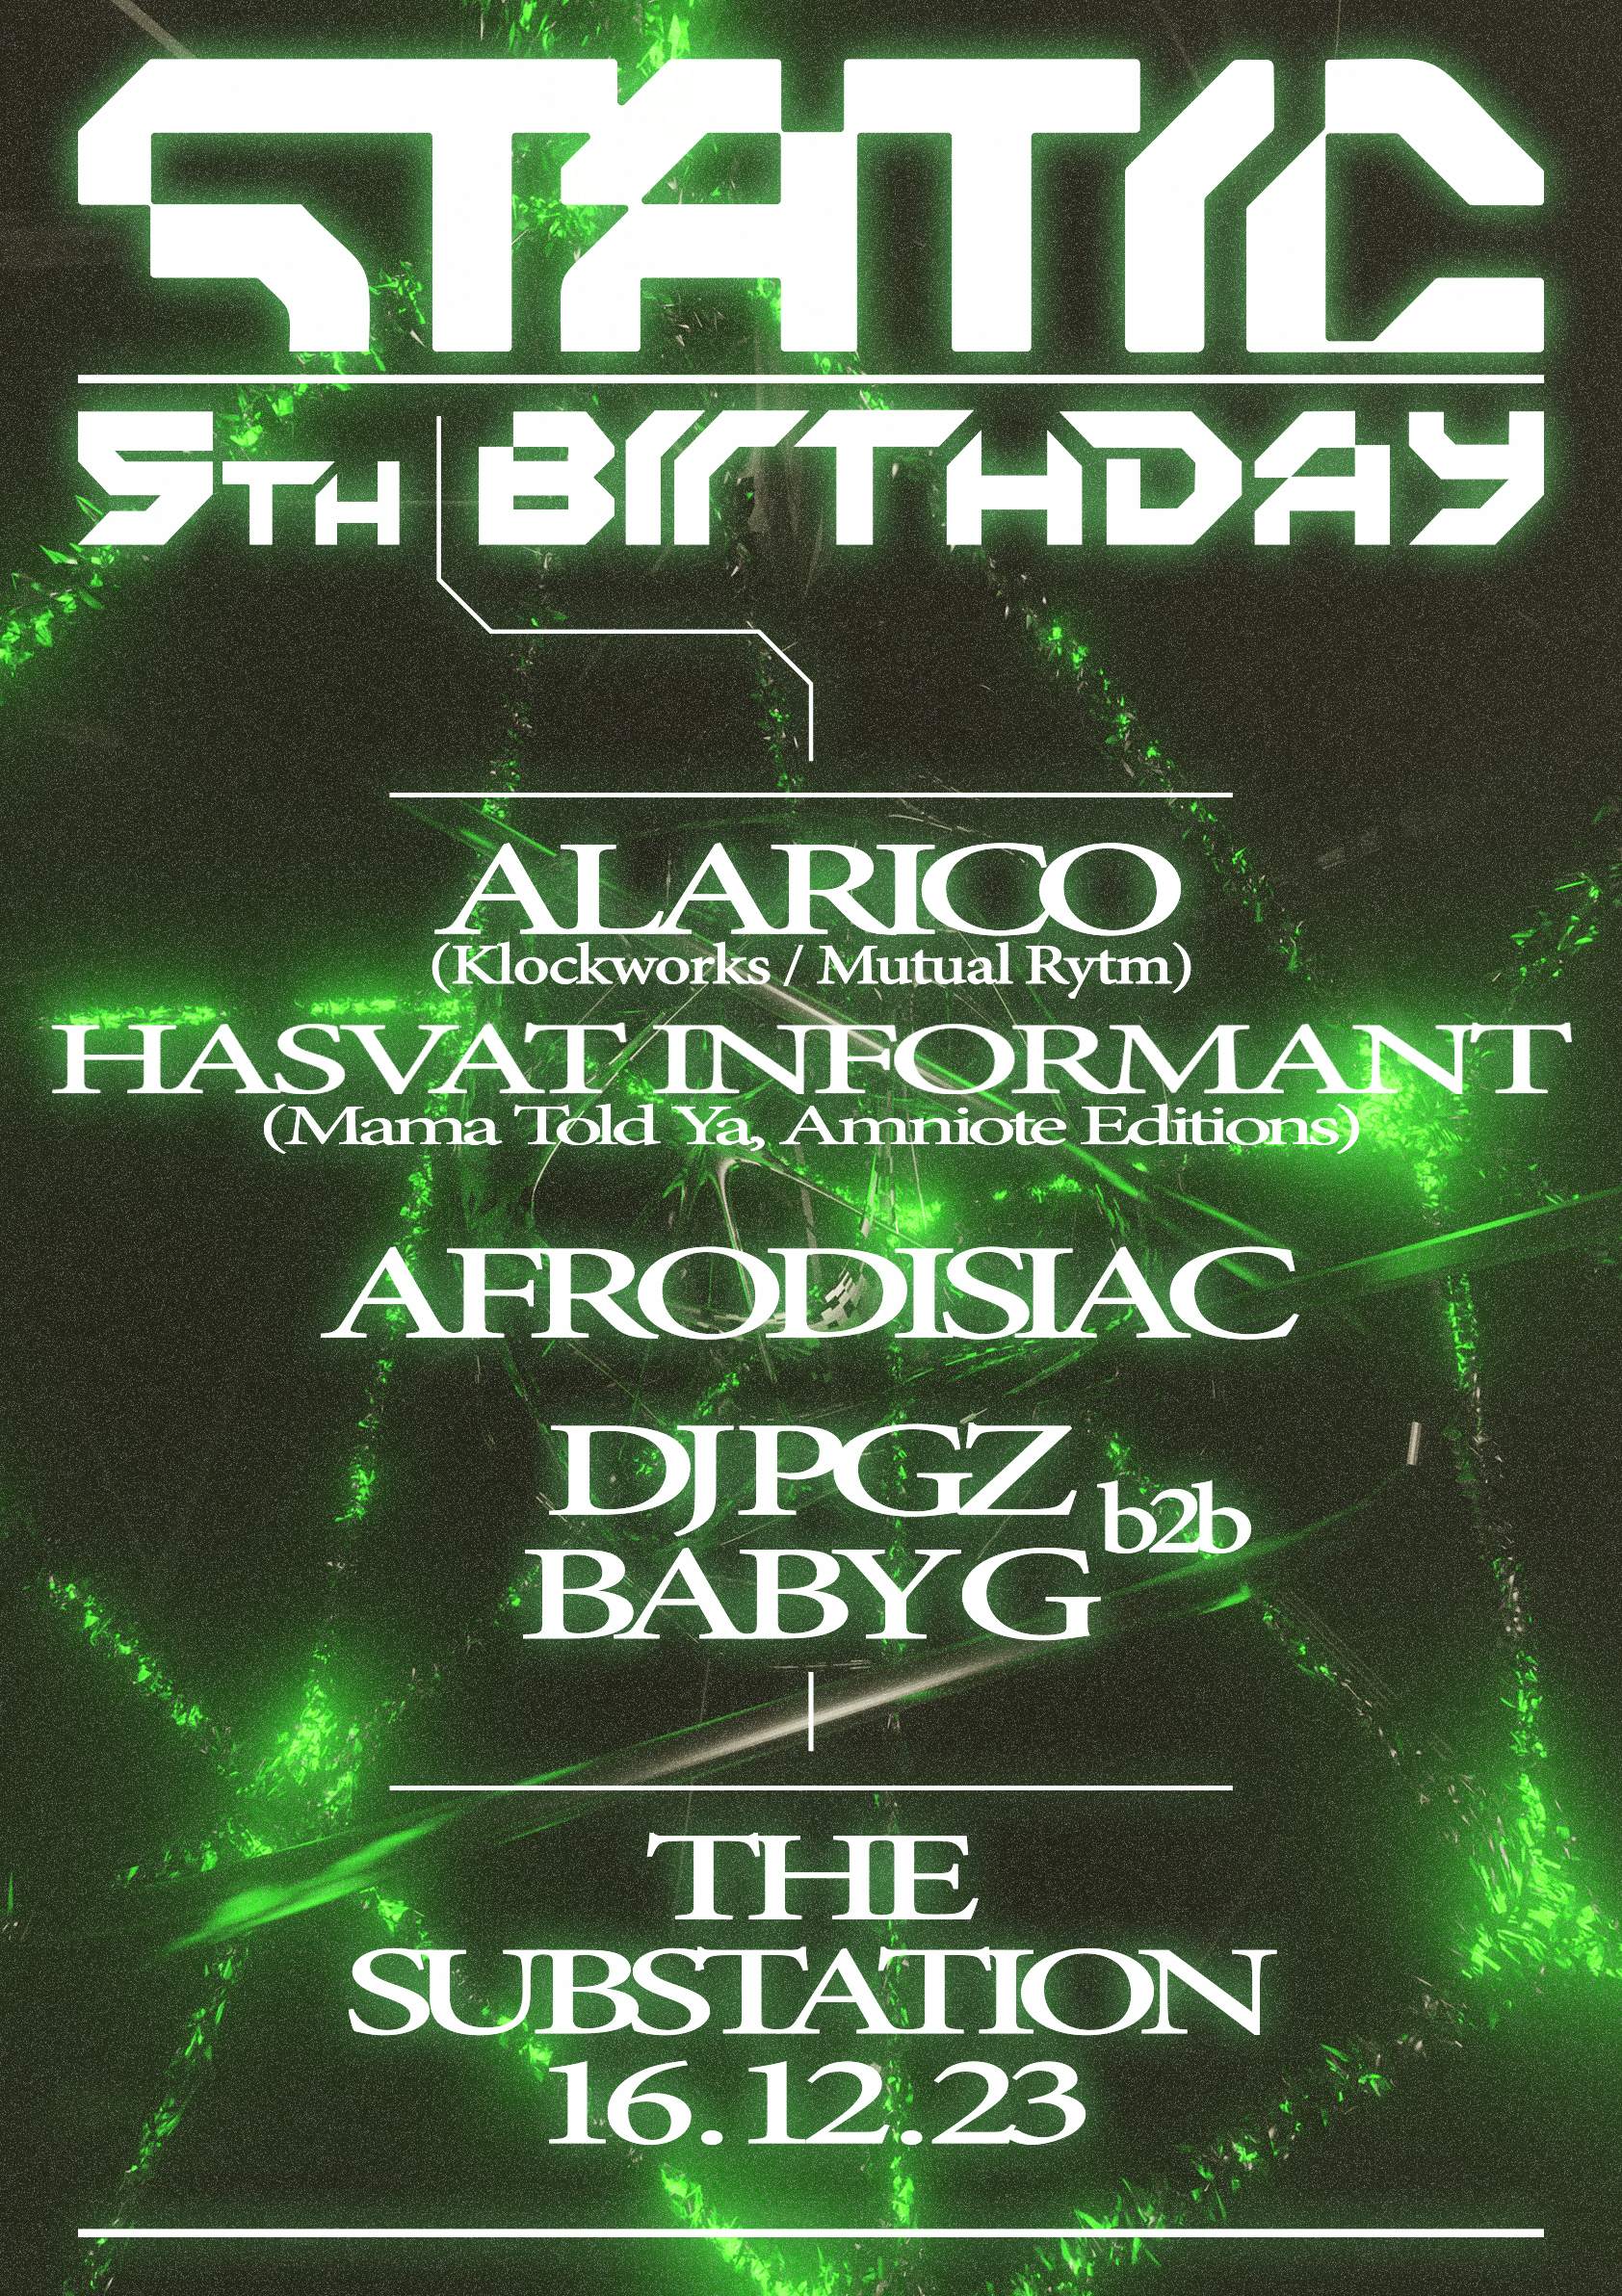 Static 5th Birthday with Alarico and dj pgz B2B Baby G - フライヤー表